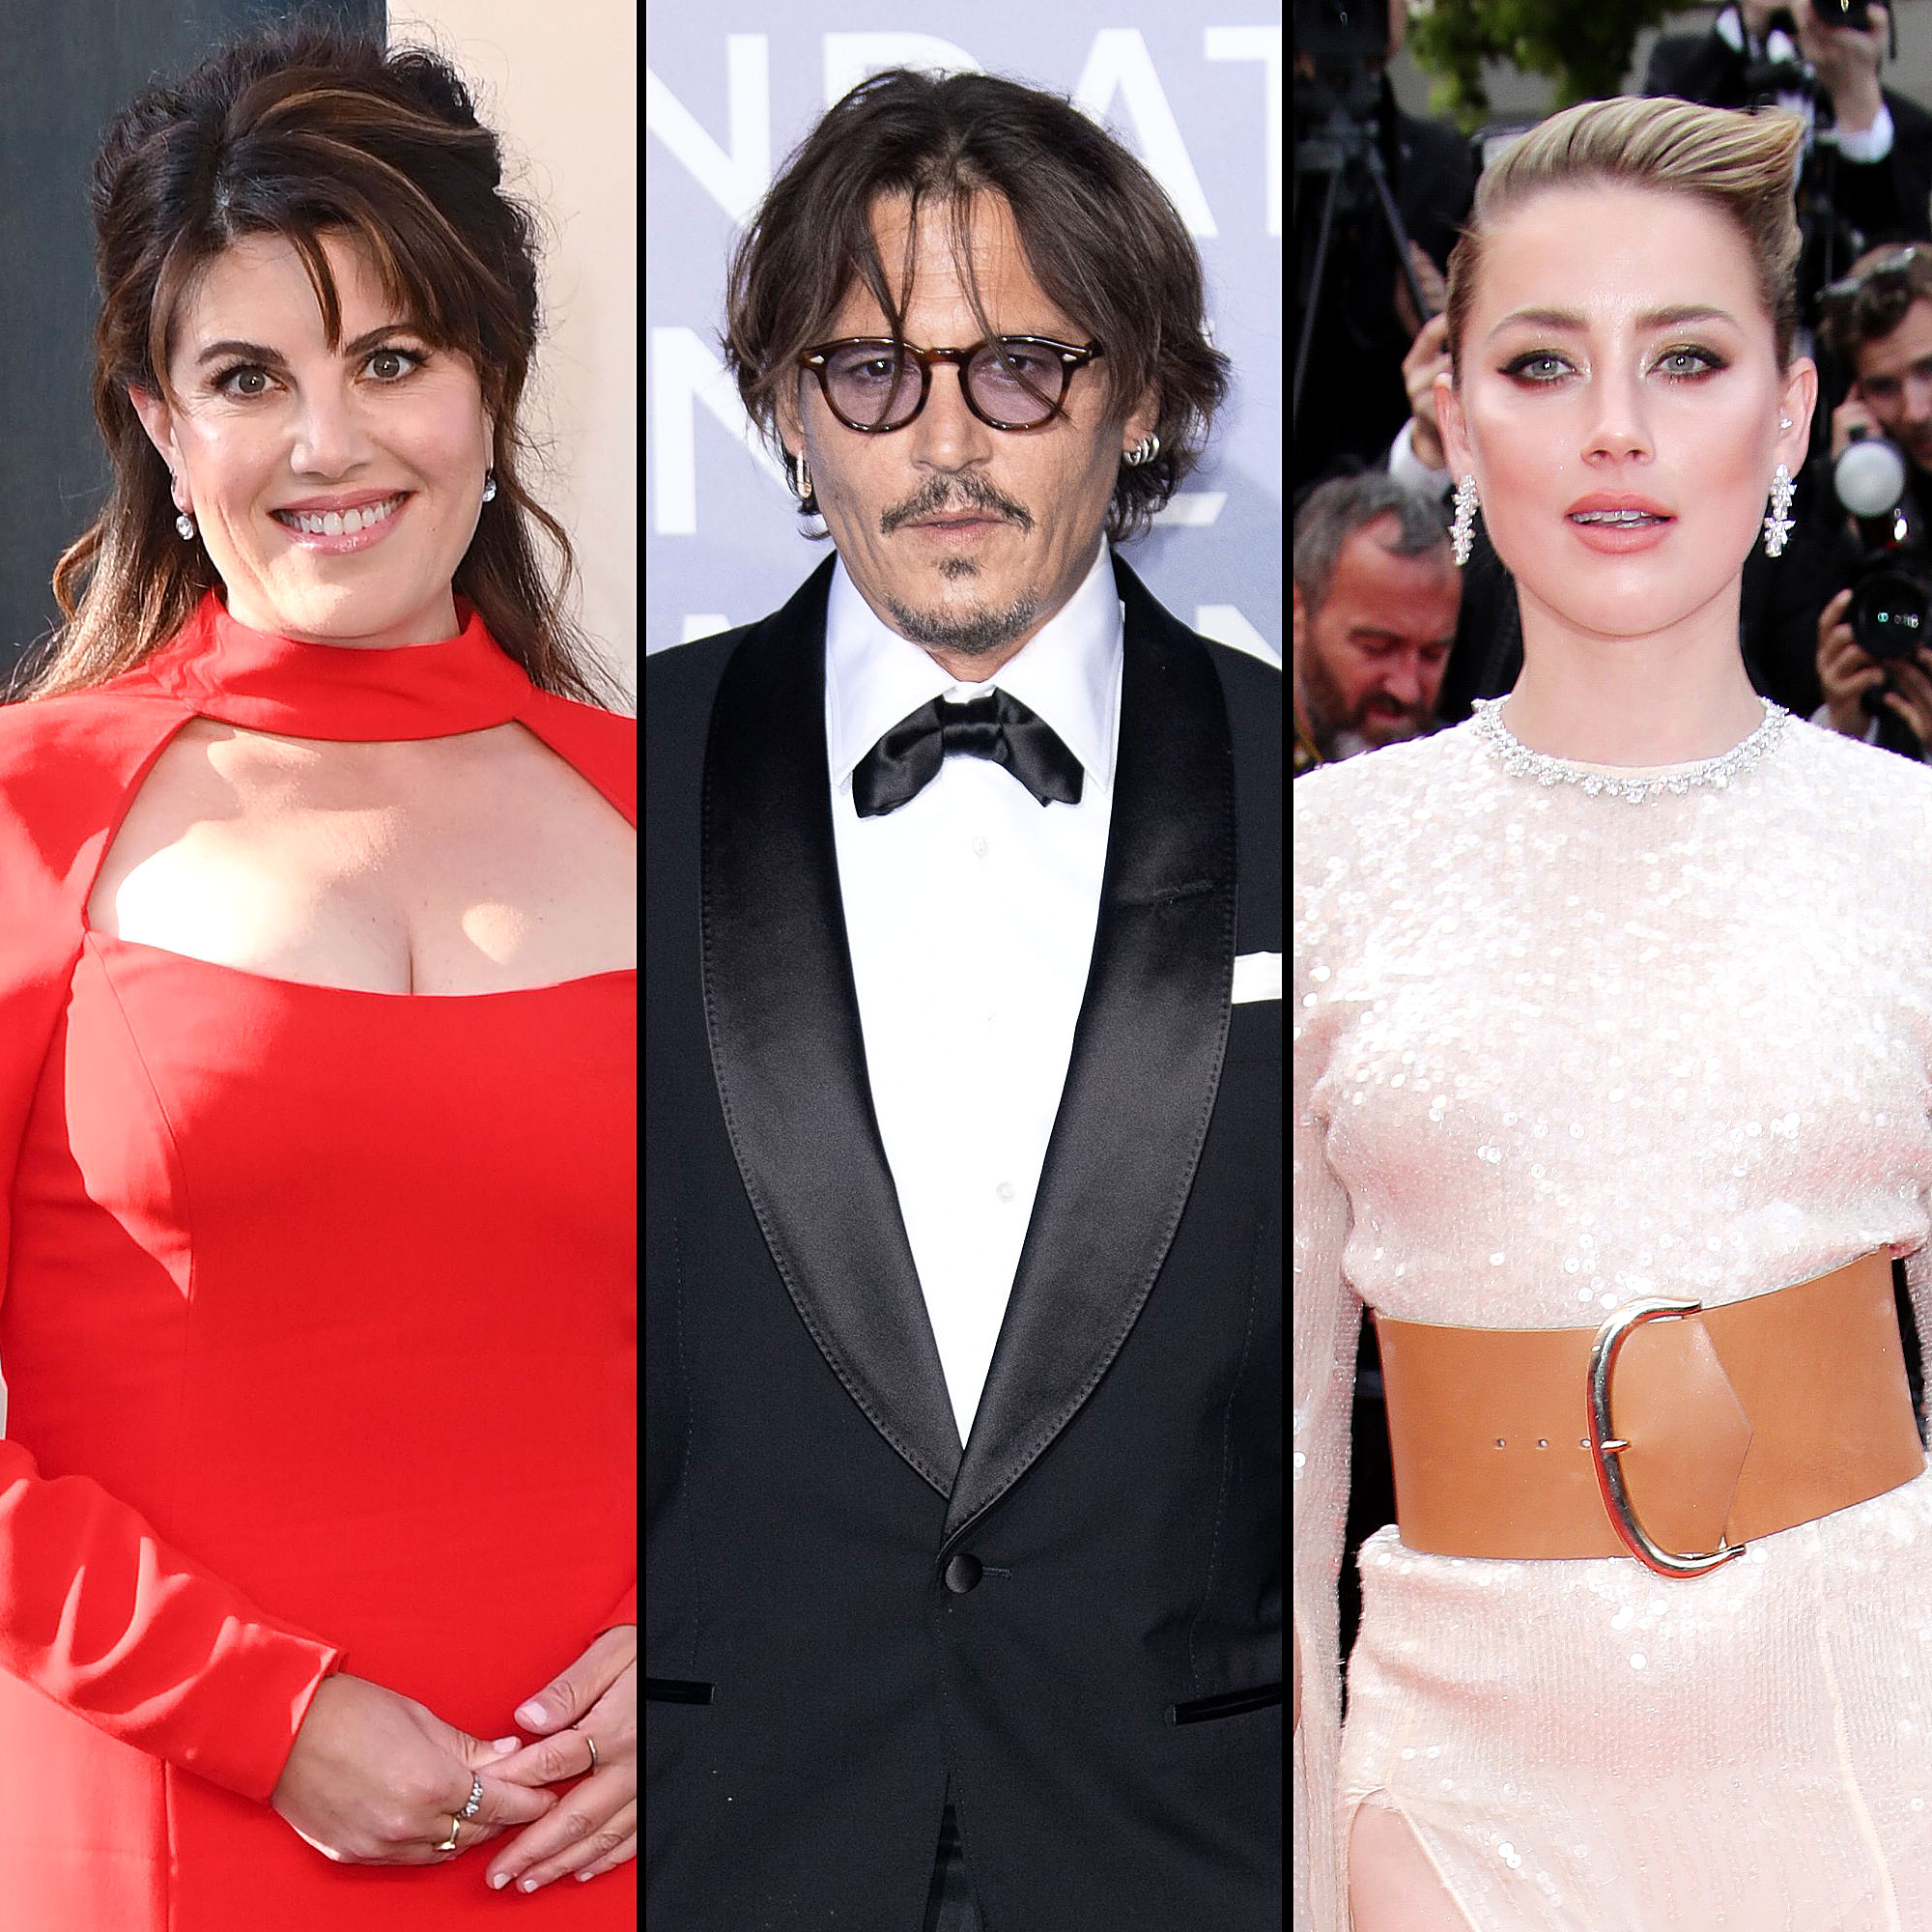 Johnny Depp Porn - Johnny Depp, Amber Heard's Trial: Drew Barrymore, More Stars React